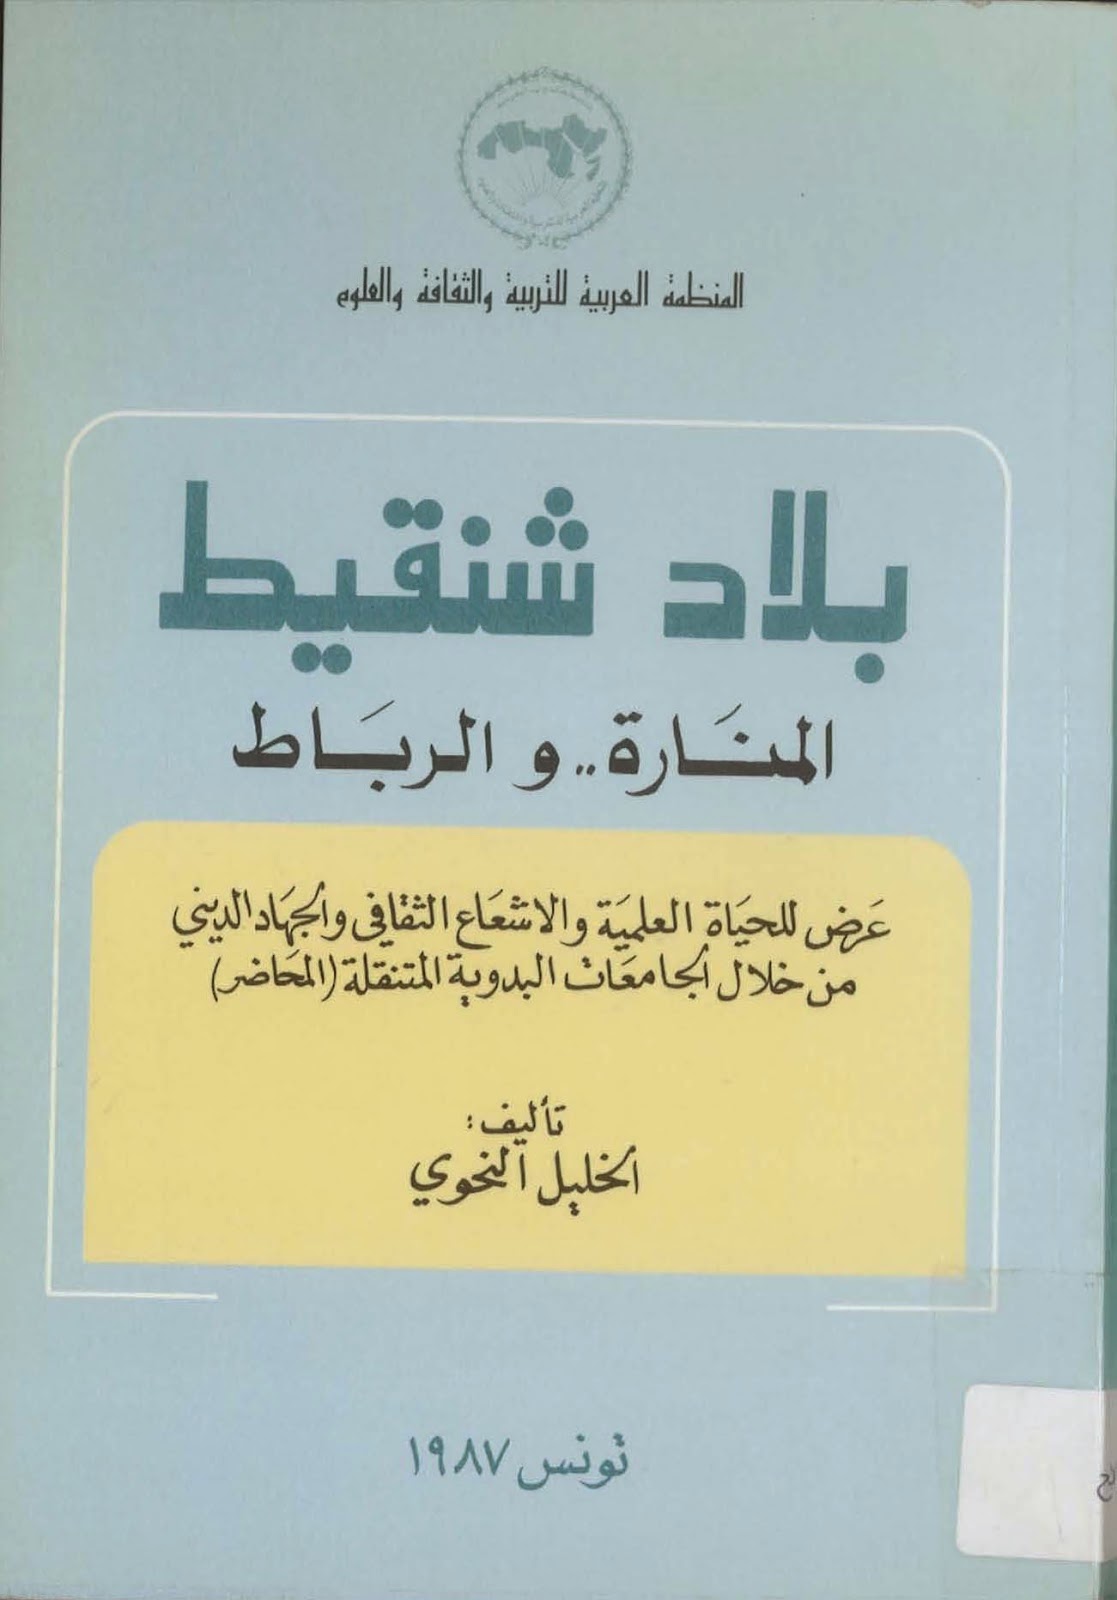 Photo of كتاب “بلاد شنقيط، المنارة.. والرباط” للشيخ الخليل النحوي